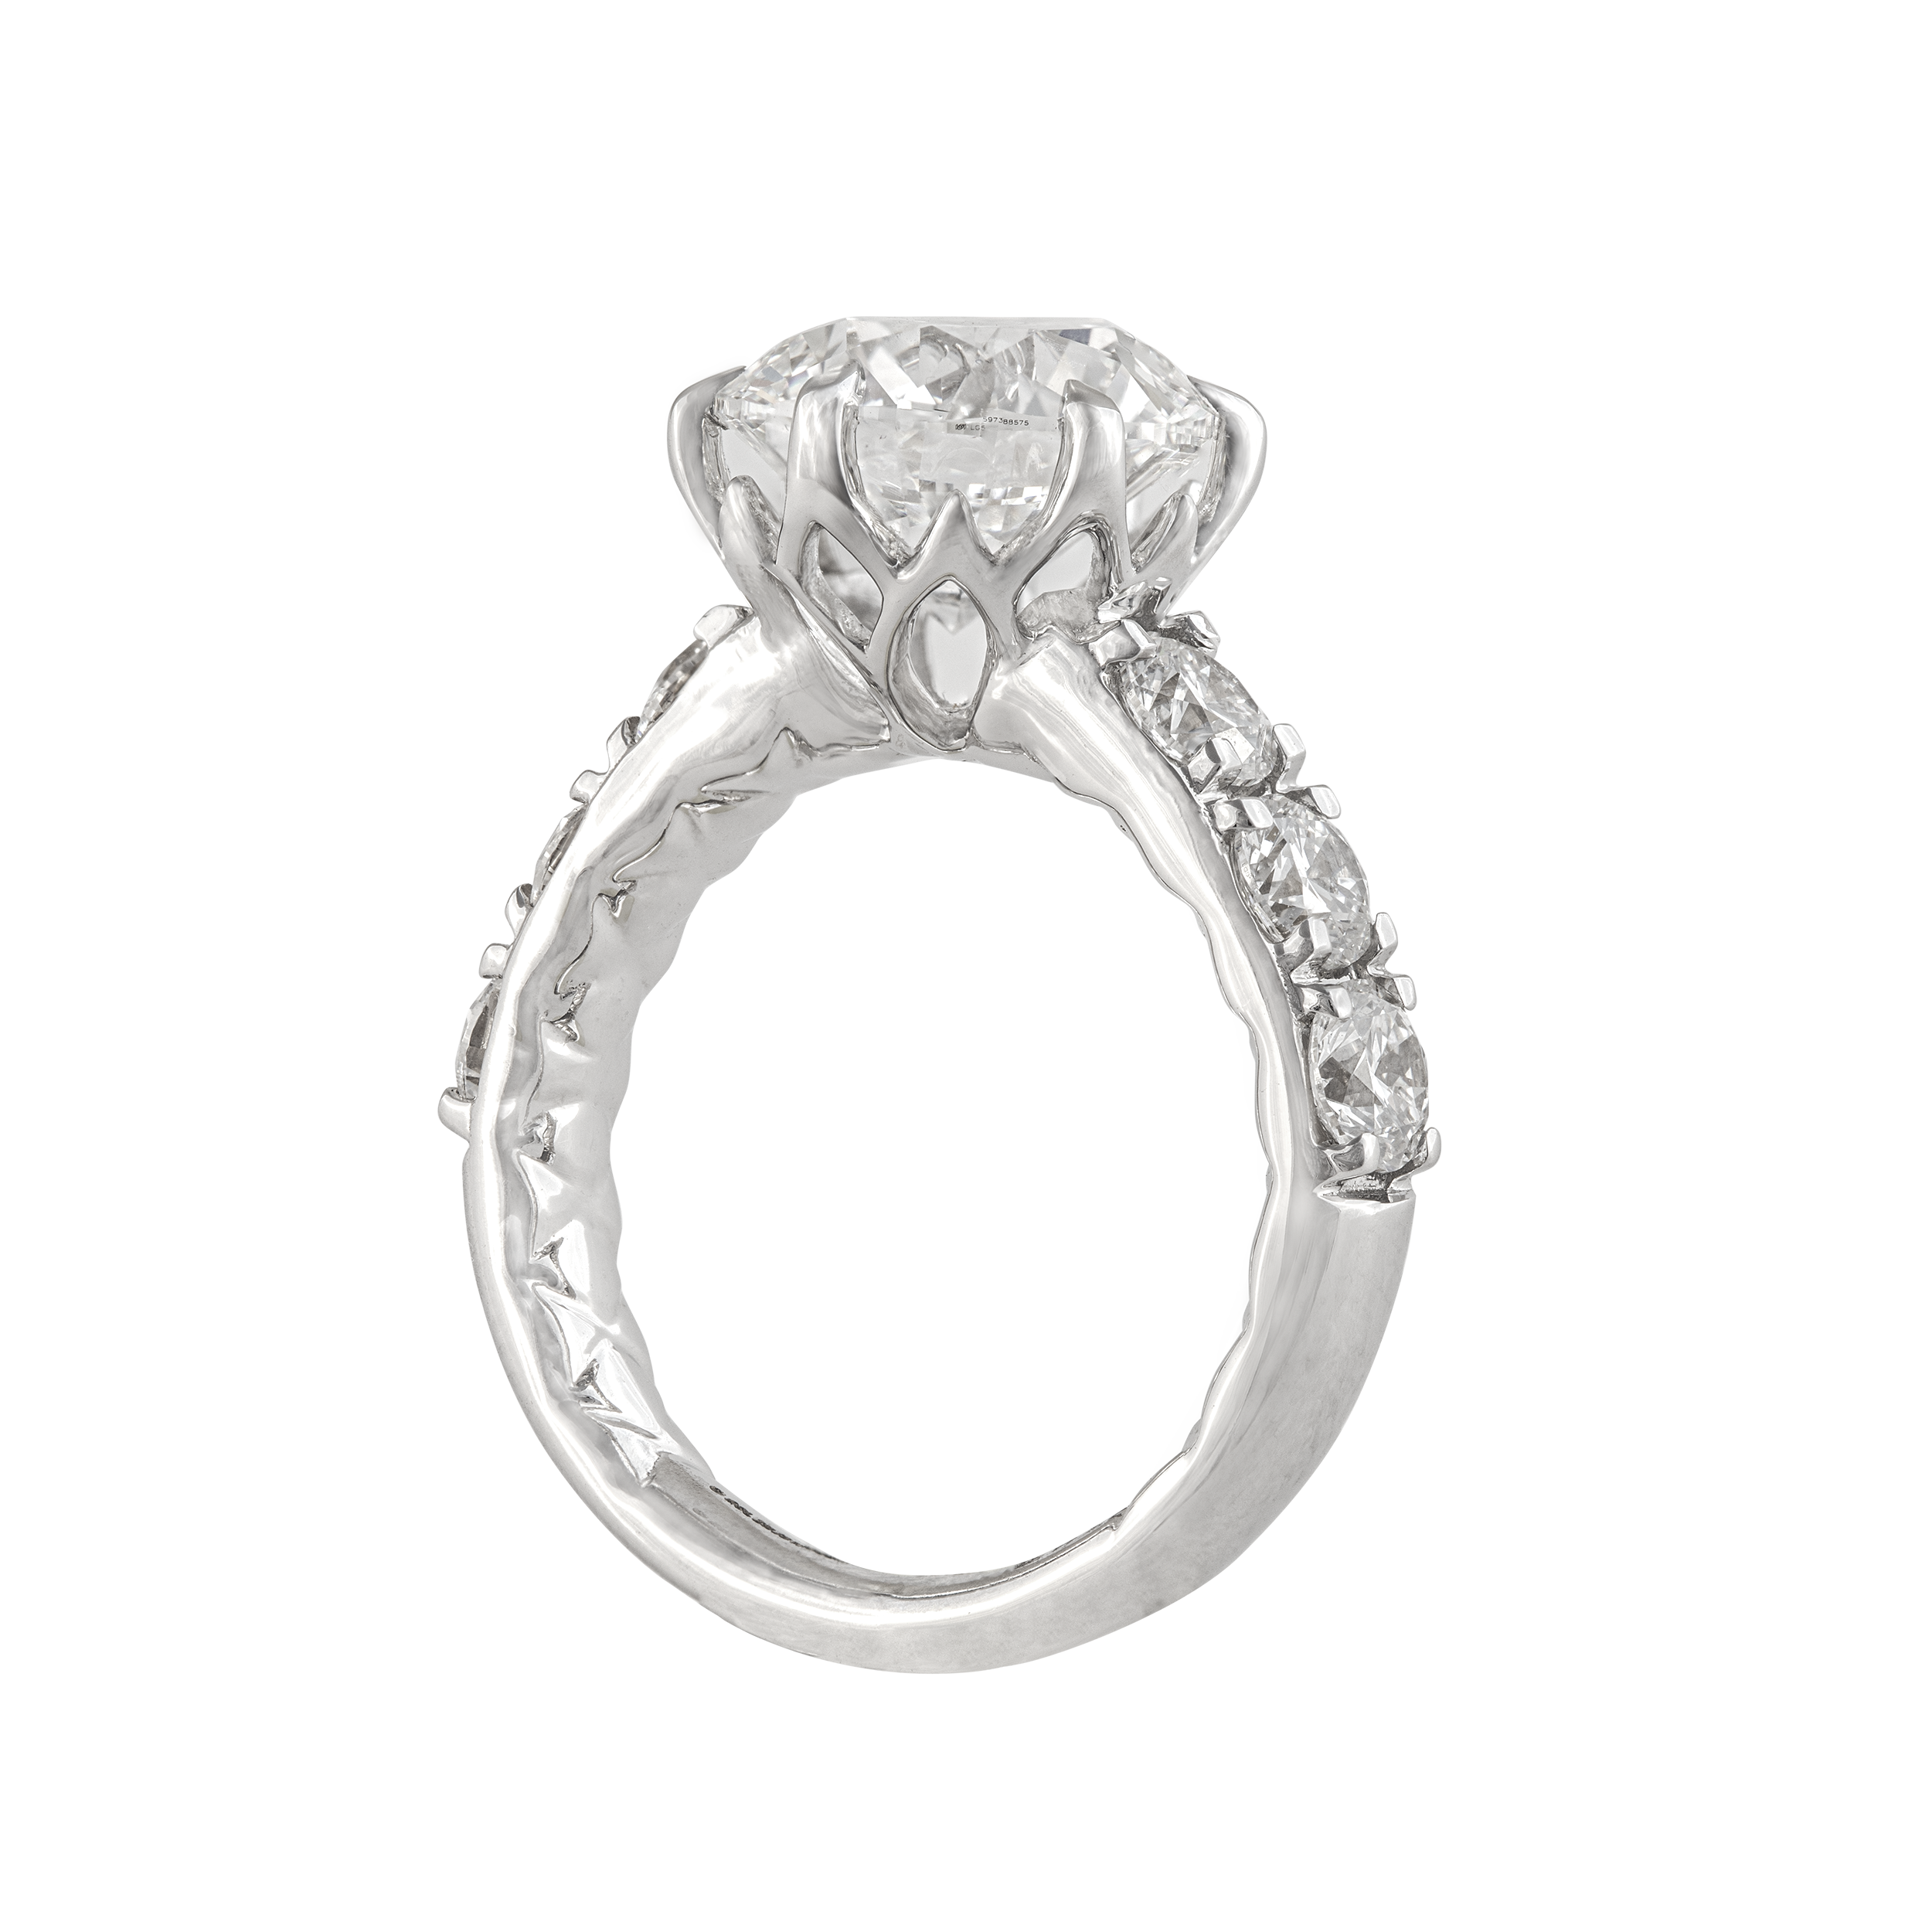 Exquisite Lab Grown Diamond Ring | SKU: 0019332000